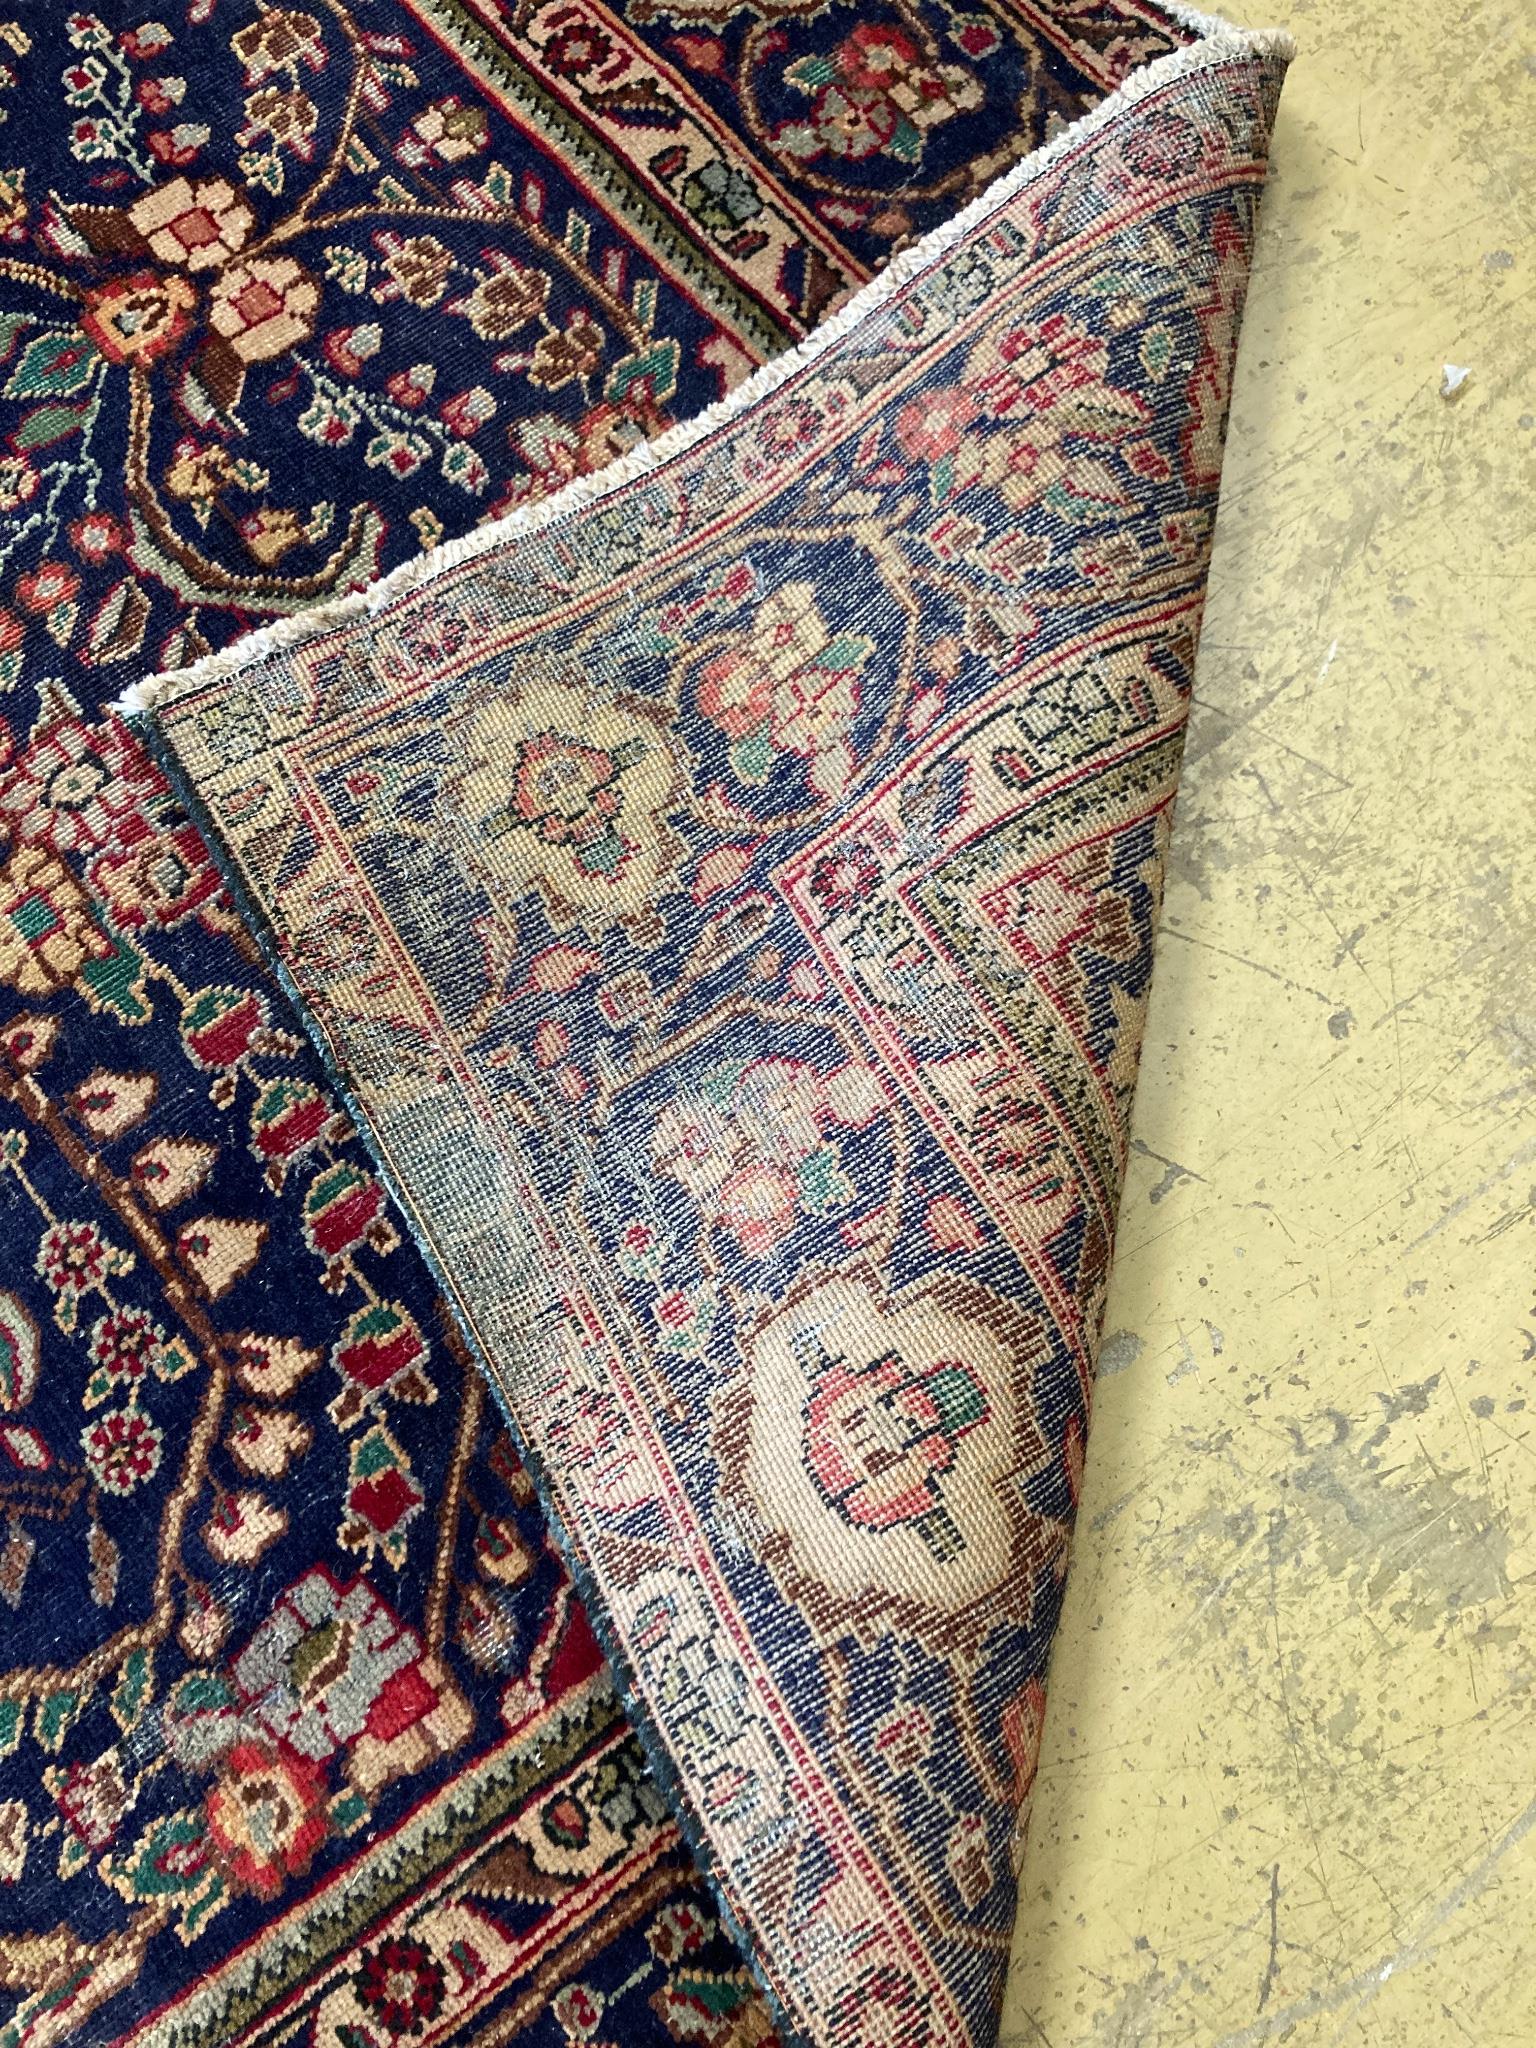 A North West Persian design blue ground carpet, 284 x 196cm